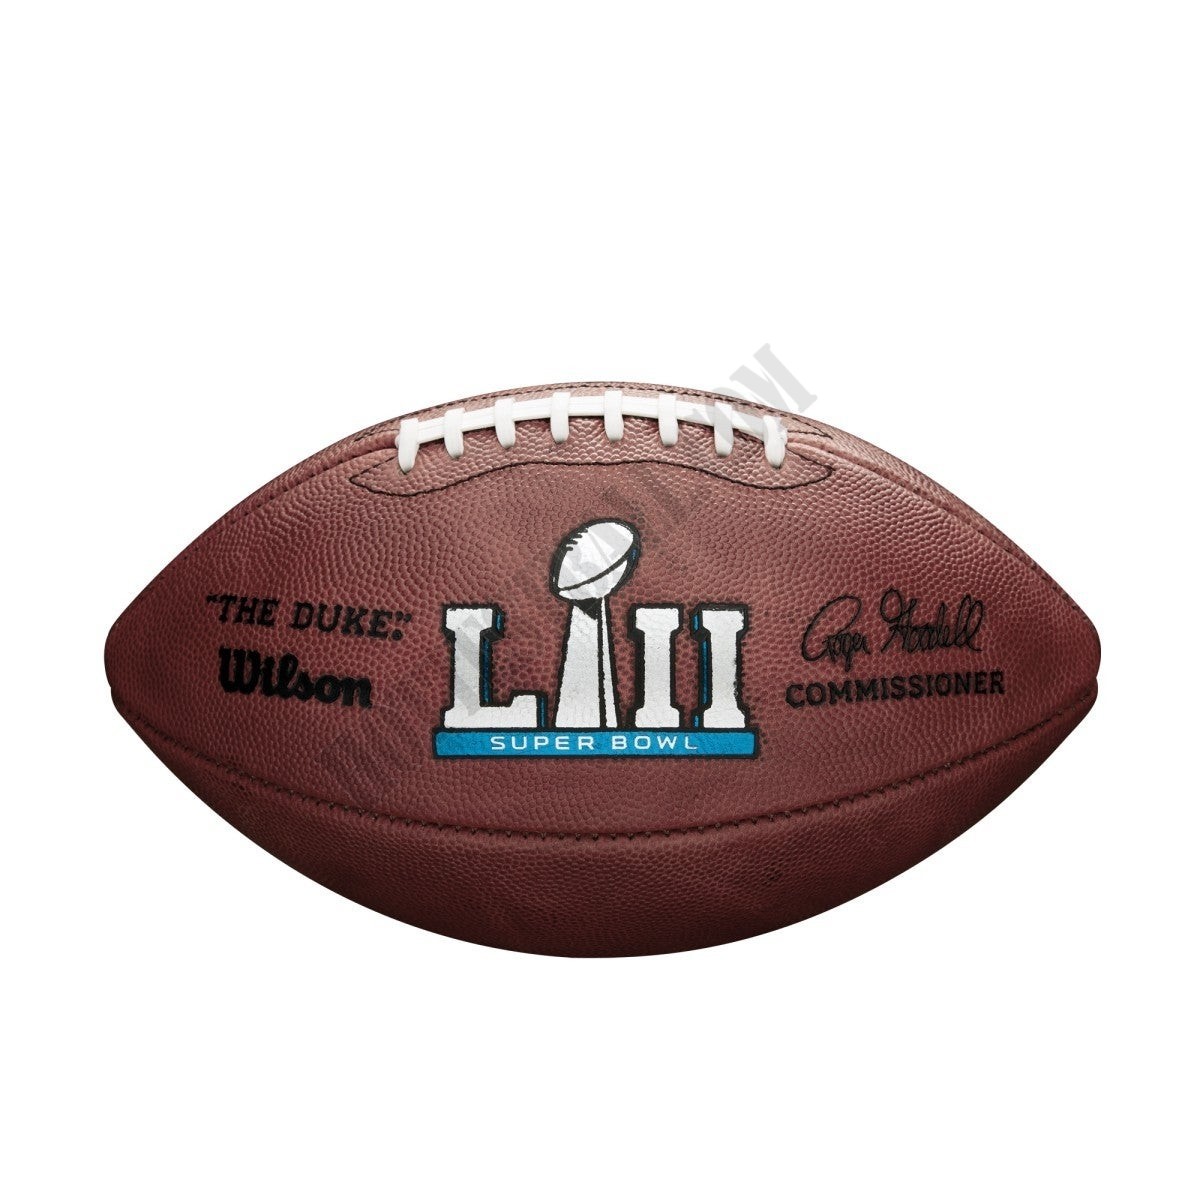 Super Bowl LII Game Football - Philadelphia Eagles - Wilson Discount Store - -0